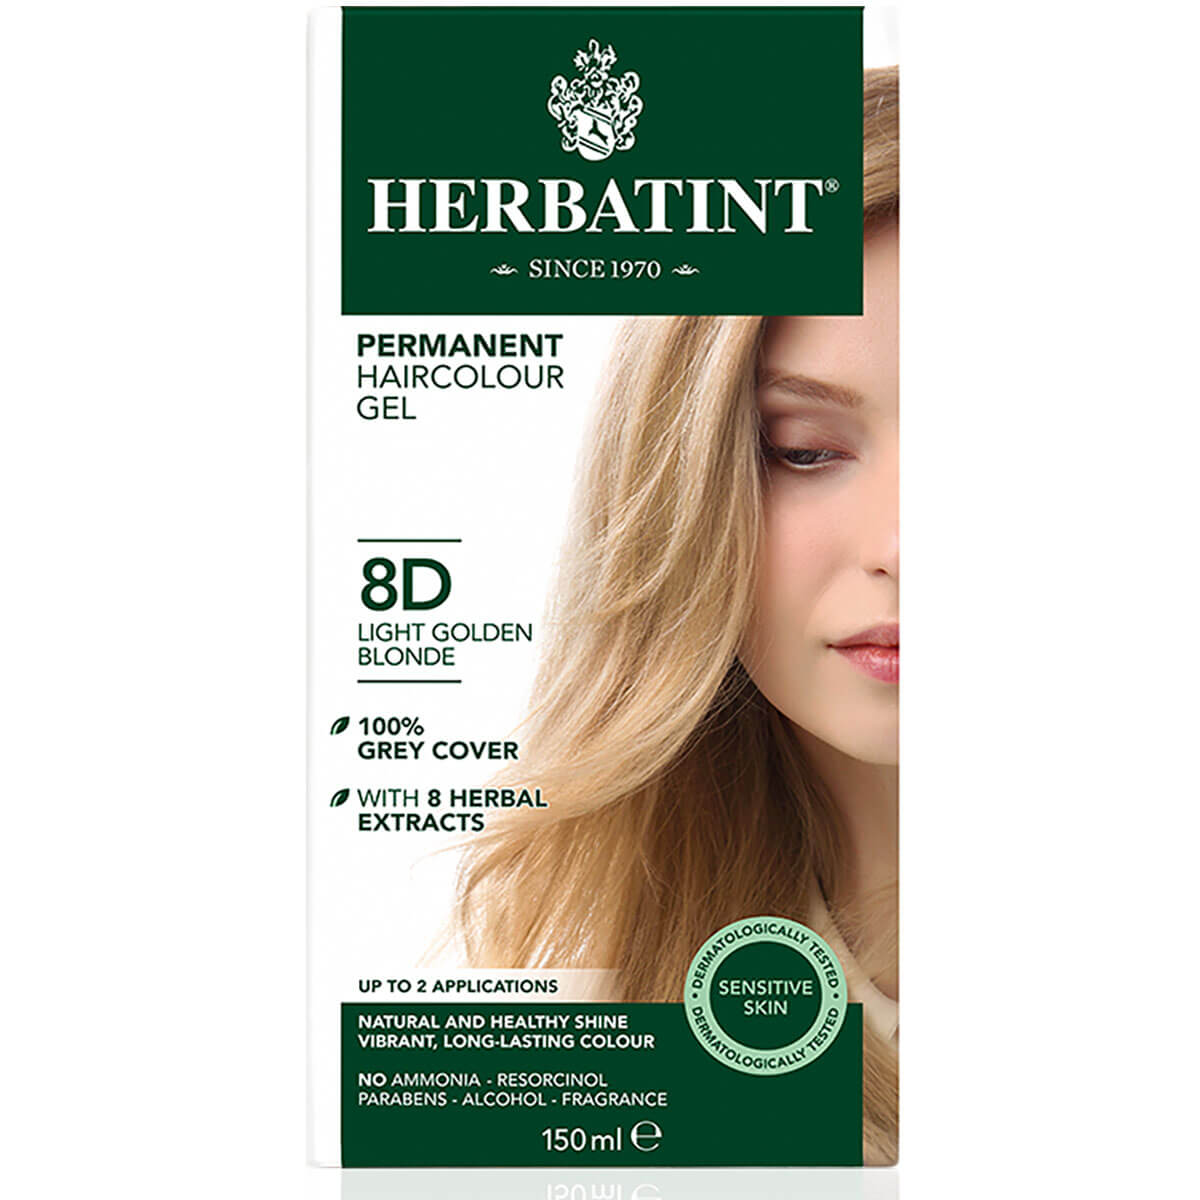 Blonde, Light Golden (8D) - Herbatint Permanent Hair Colour Gel